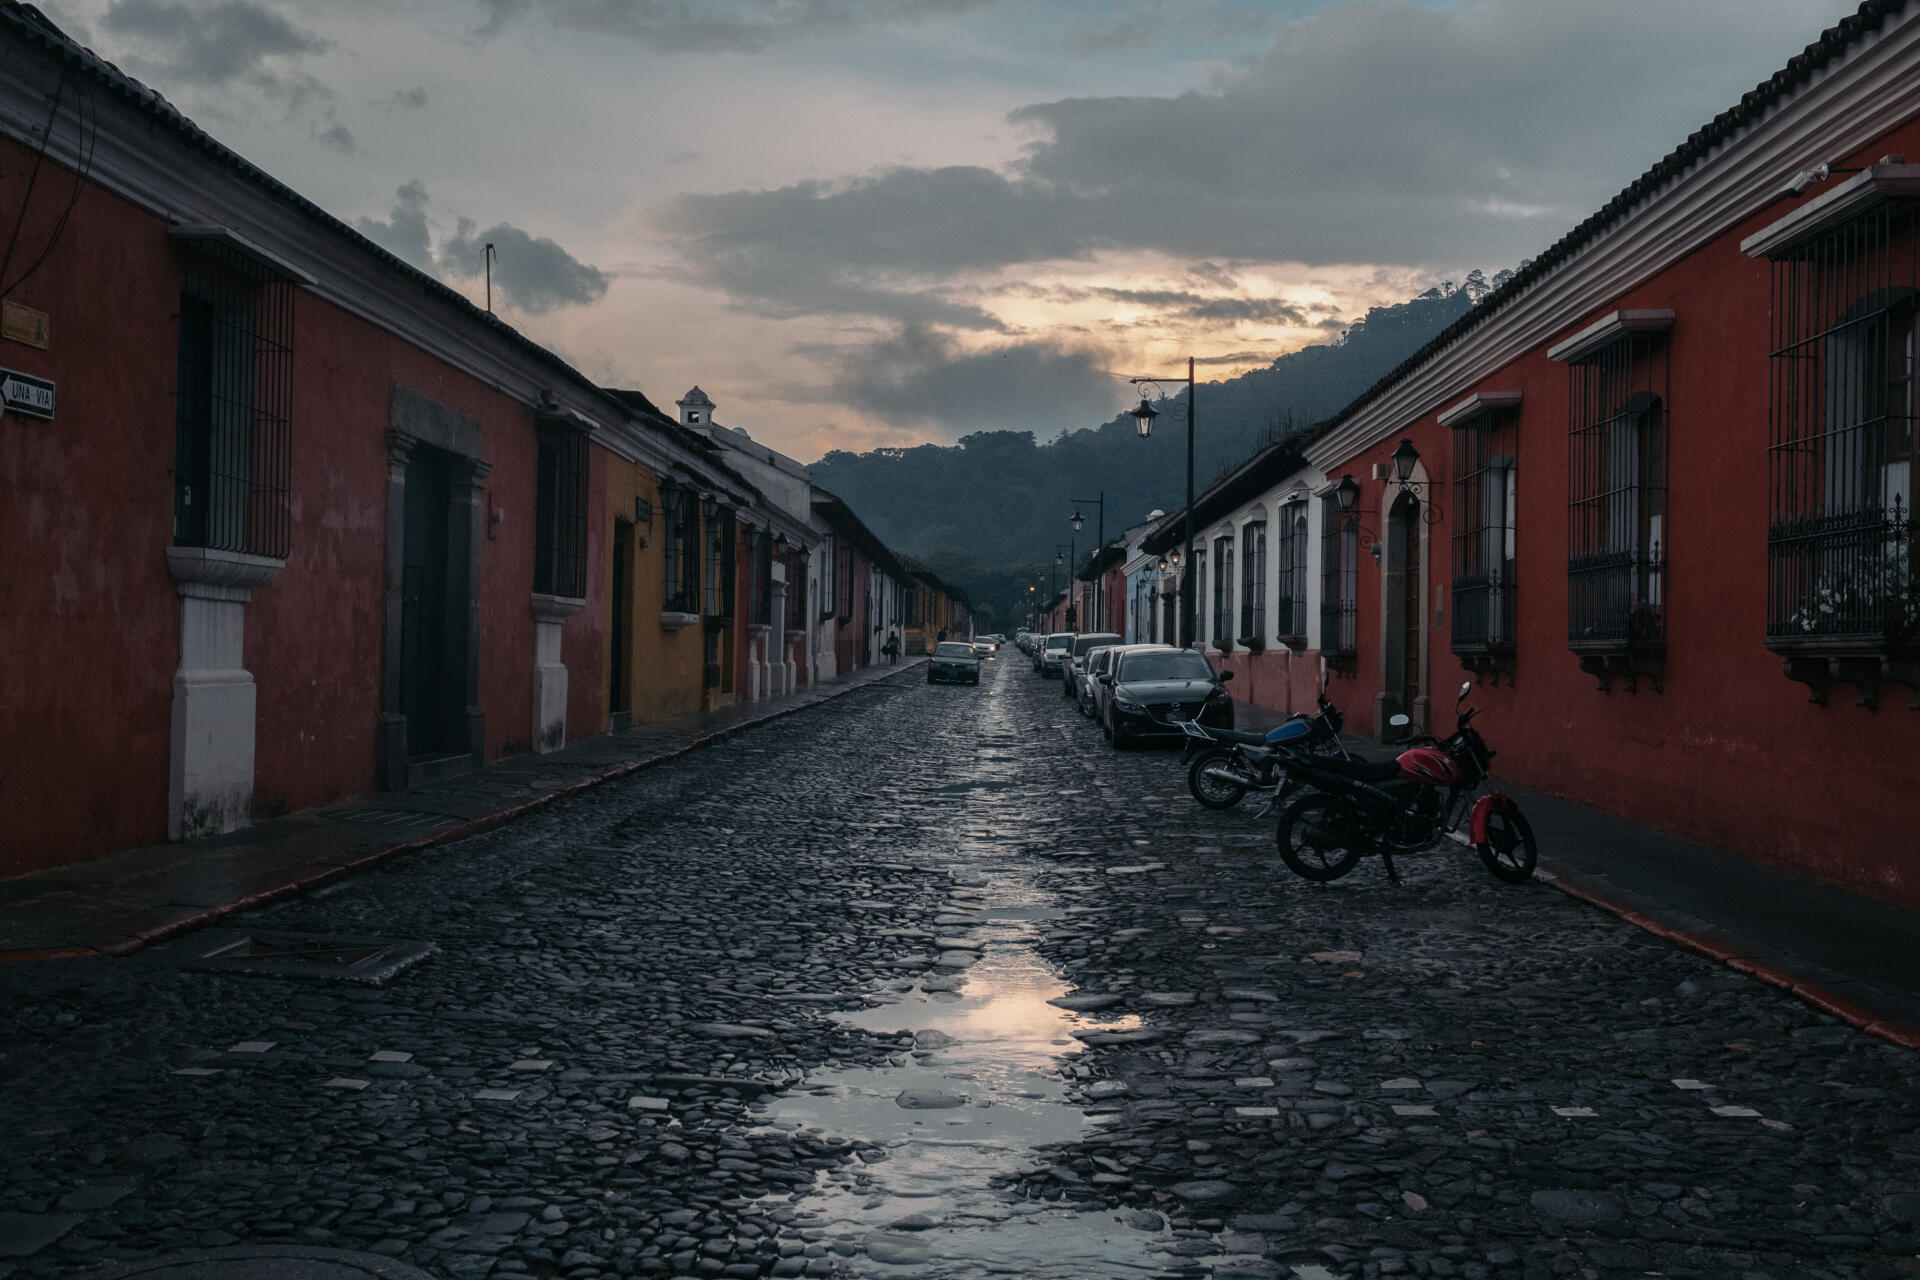 Centro de Antigua, Guatemala, 5 de junio de 2021.